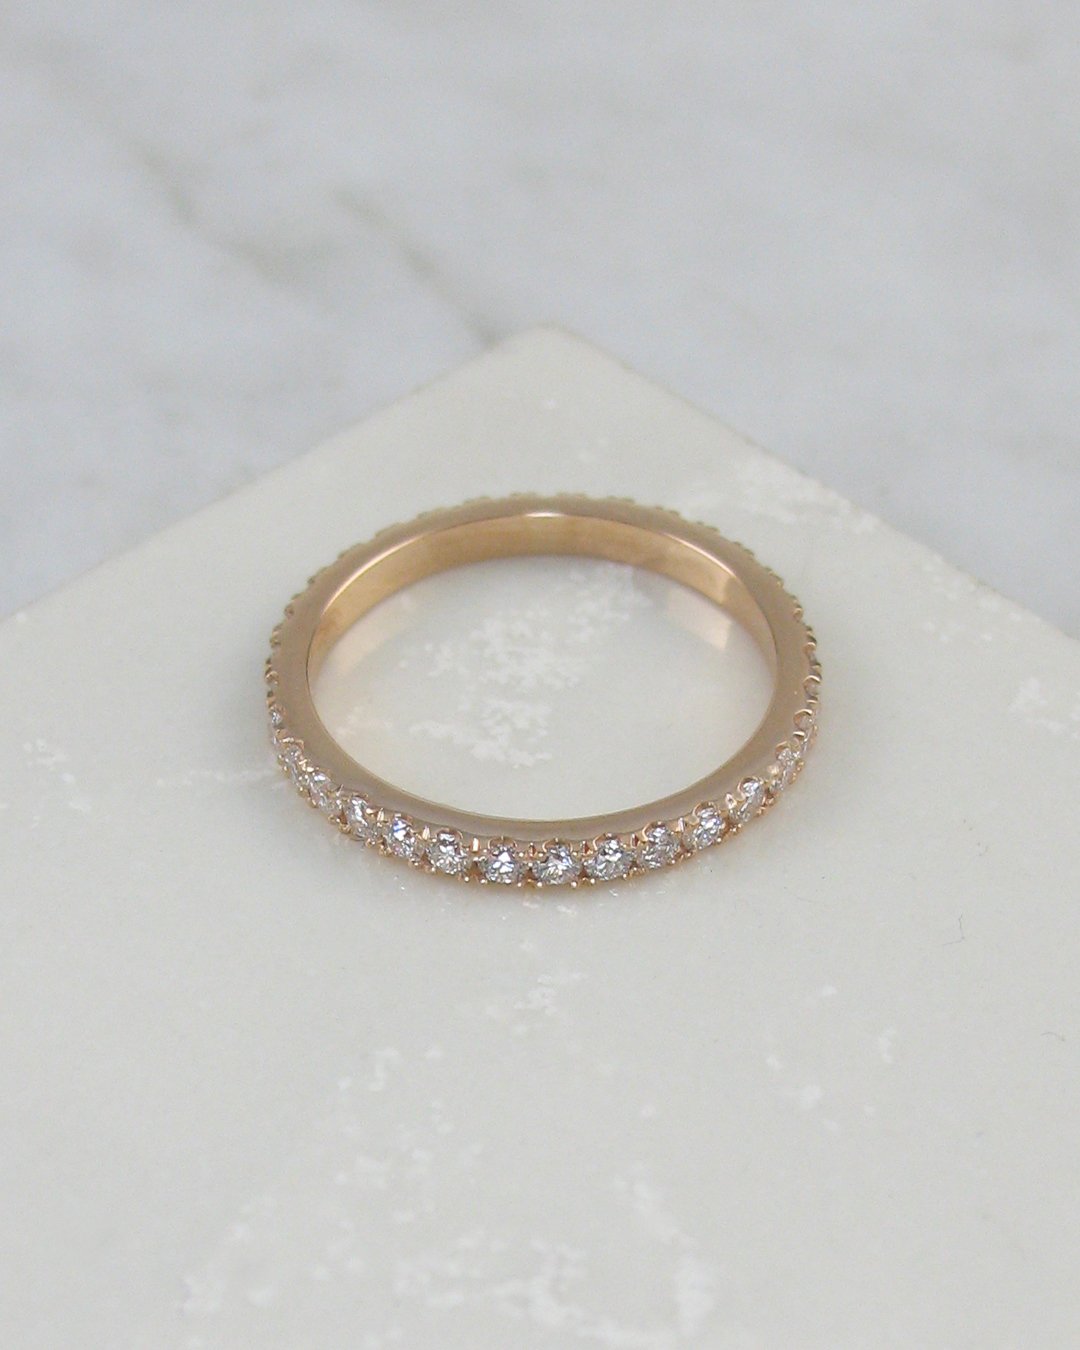 A bespoke diamond eternity ring